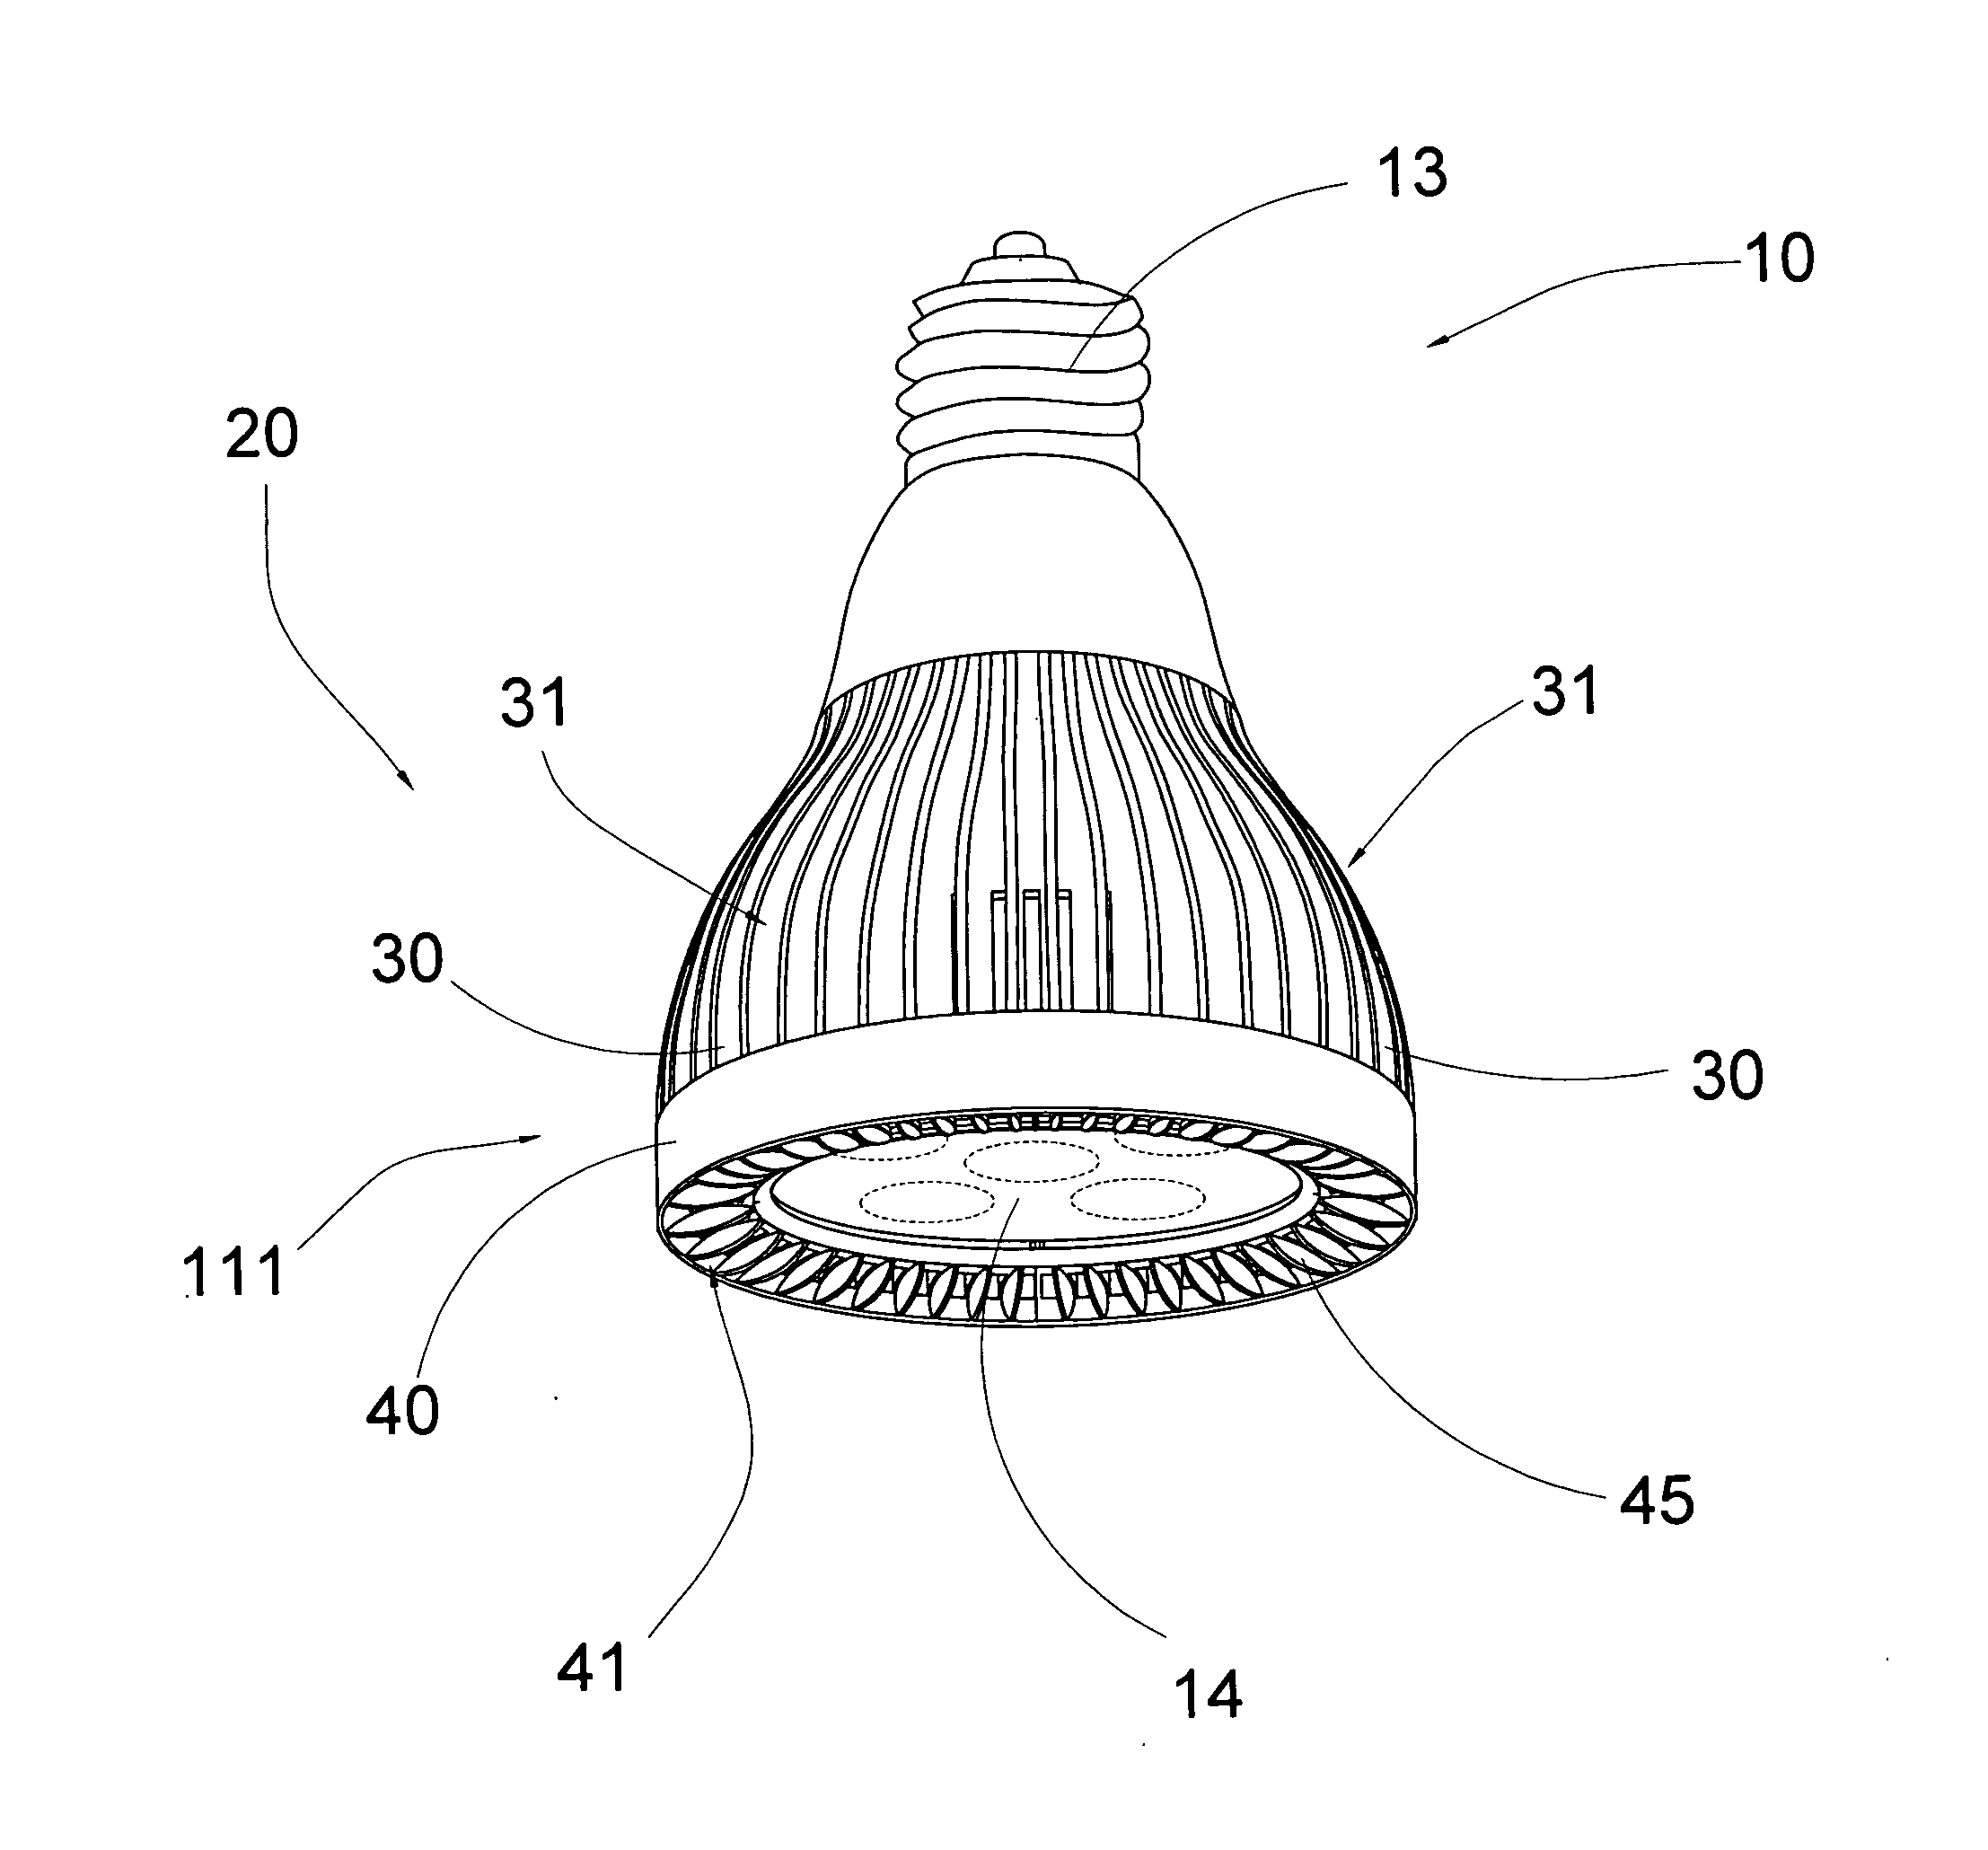 LED light device